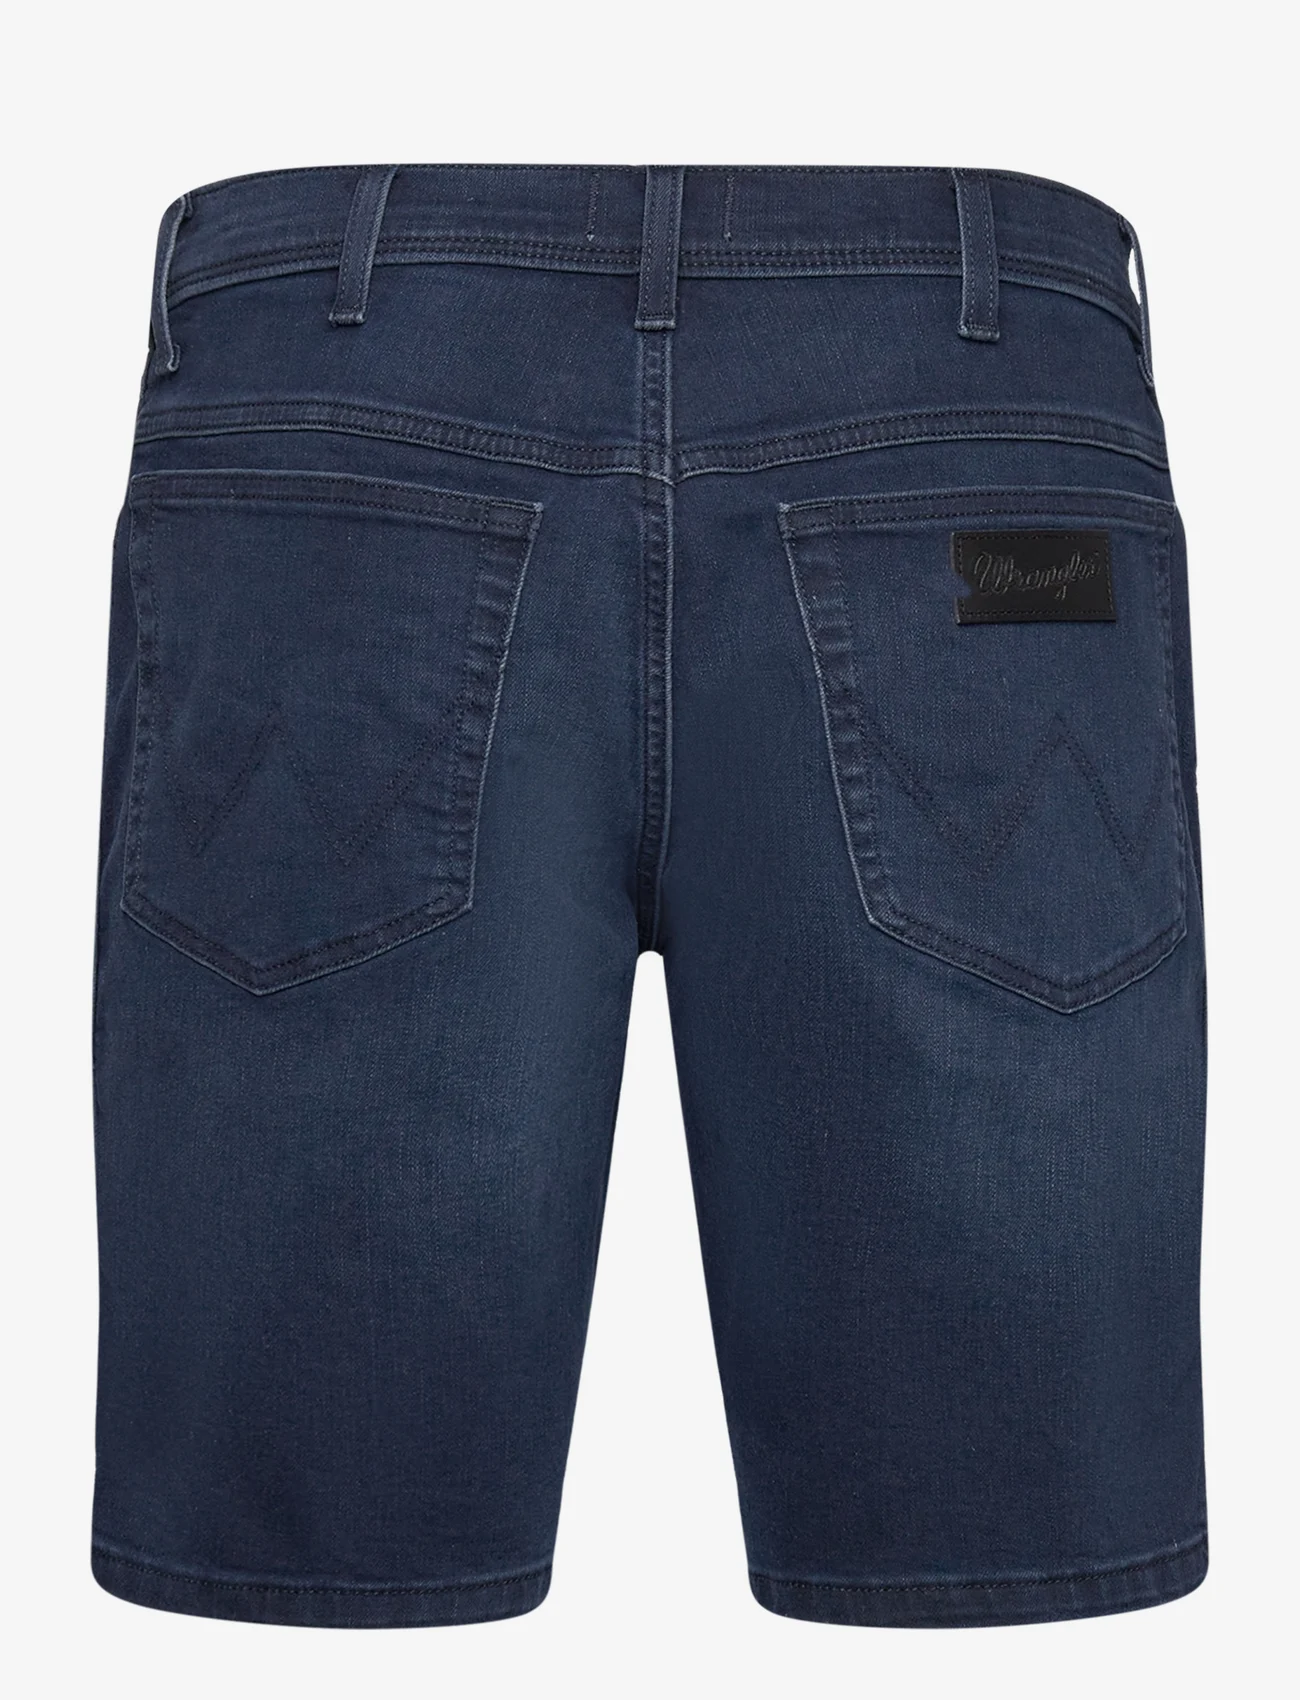 Wrangler - TEXAS SHORTS - jeans shorts - bond - 1